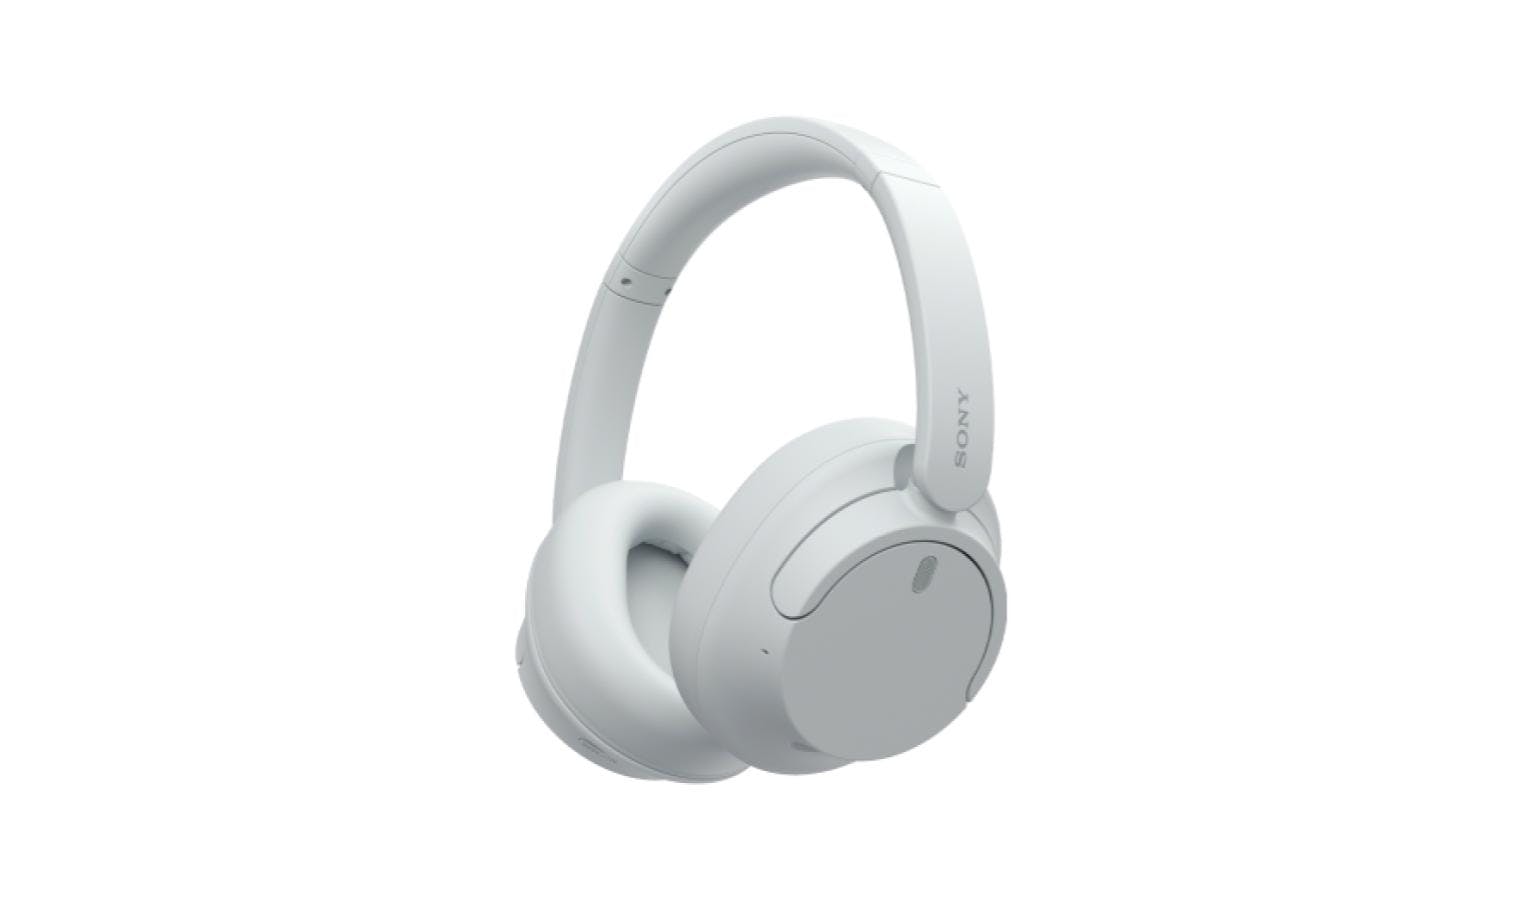  Sony WH-CH720N Noise Canceling Wireless Headphones